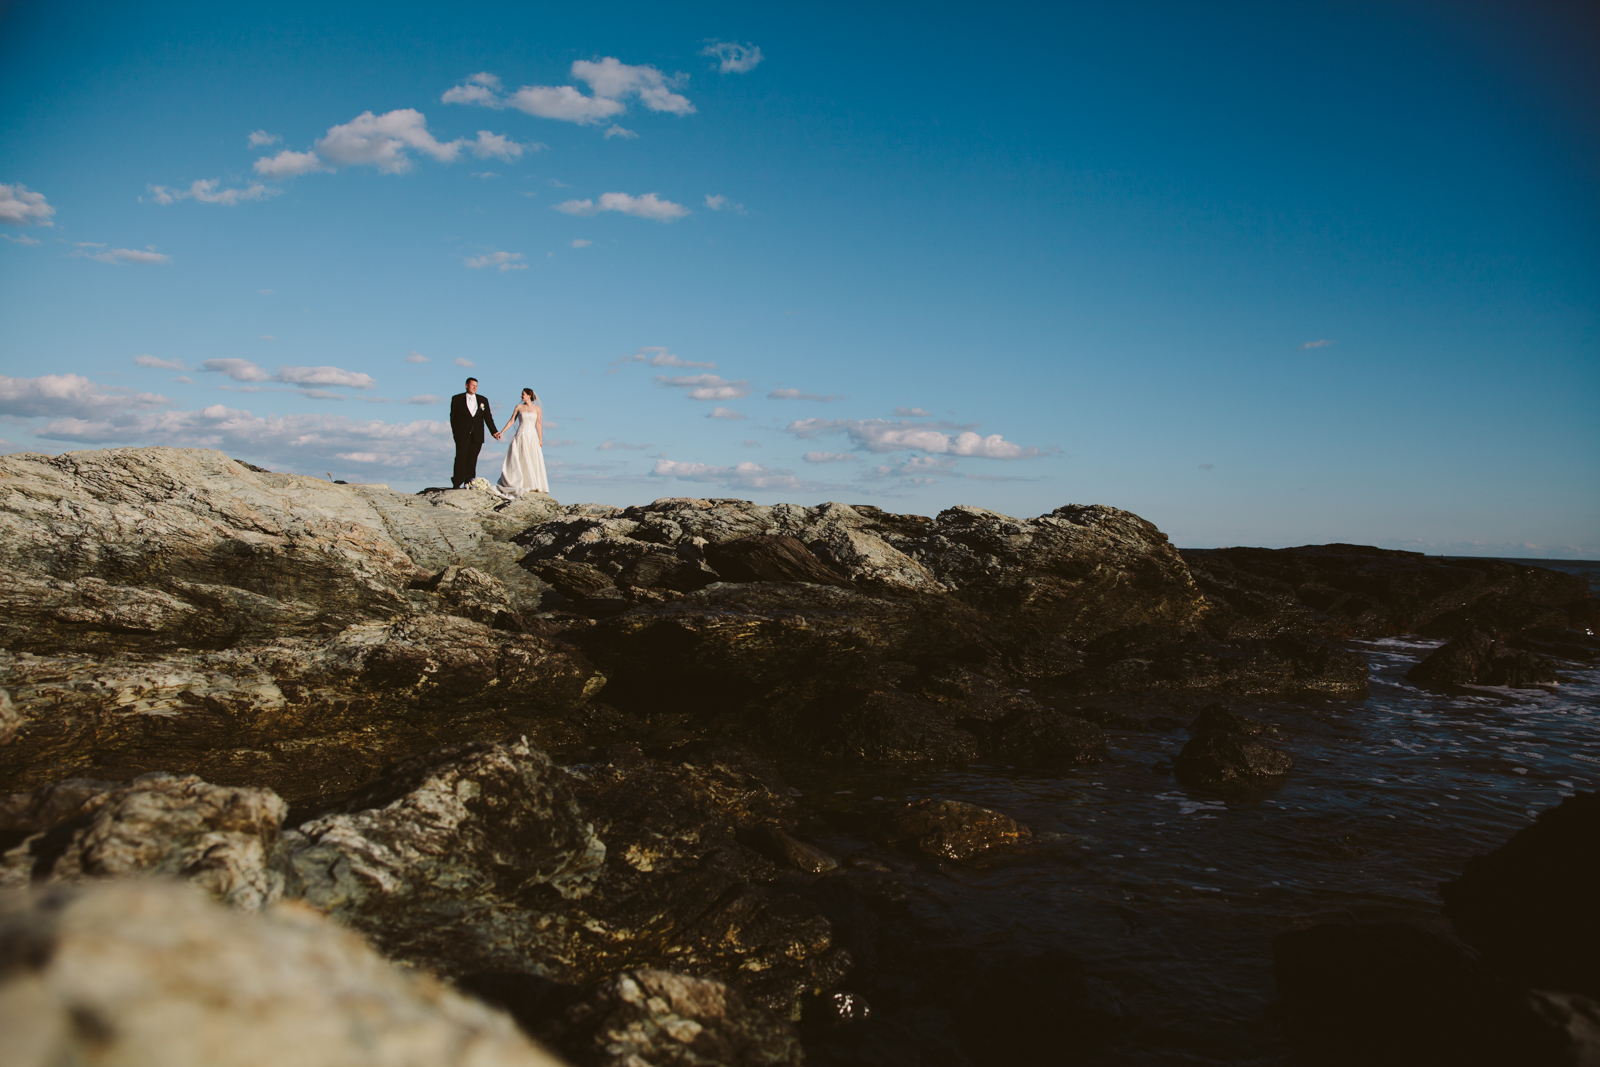 Eastons-Beach-Rotunda-Ballroom-Wedding-Newport-Rhode-Island-PhotographybyAmandaMorgan-67.jpg